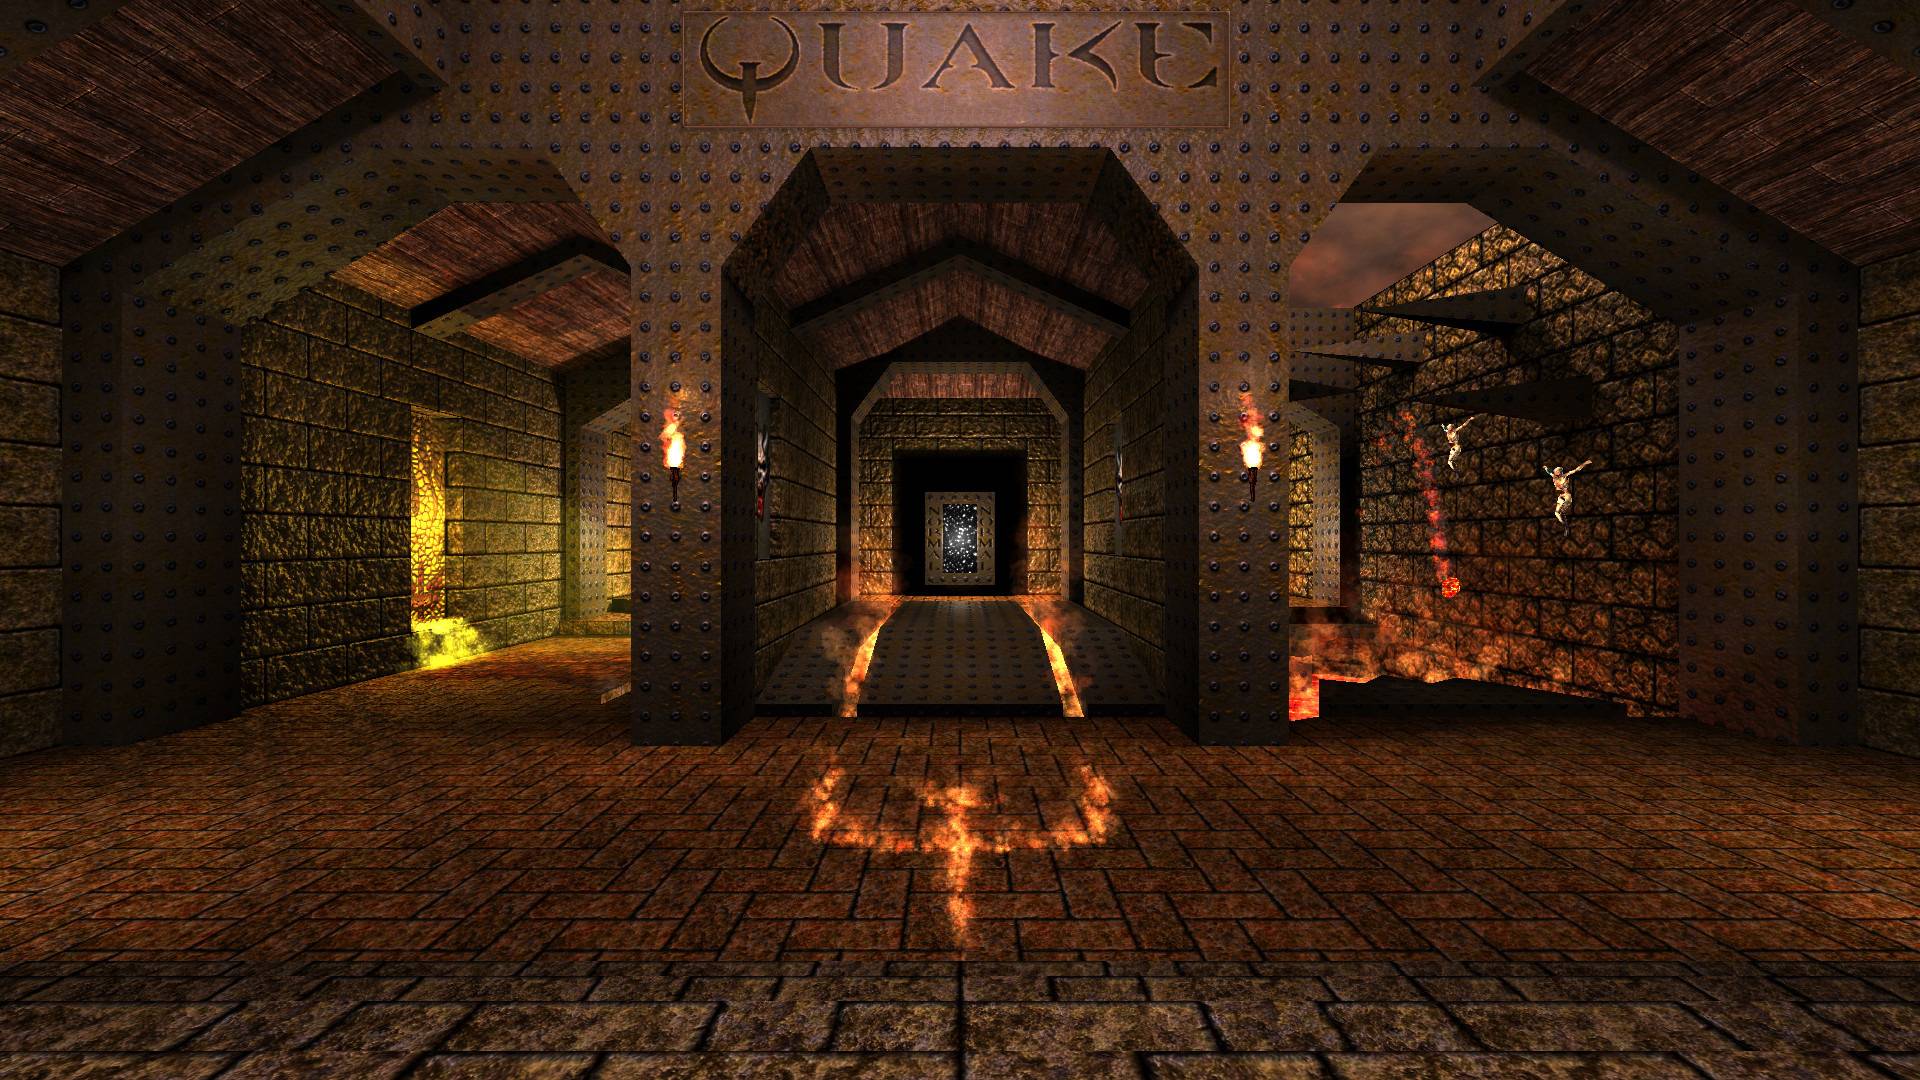 Quake Wallpaper